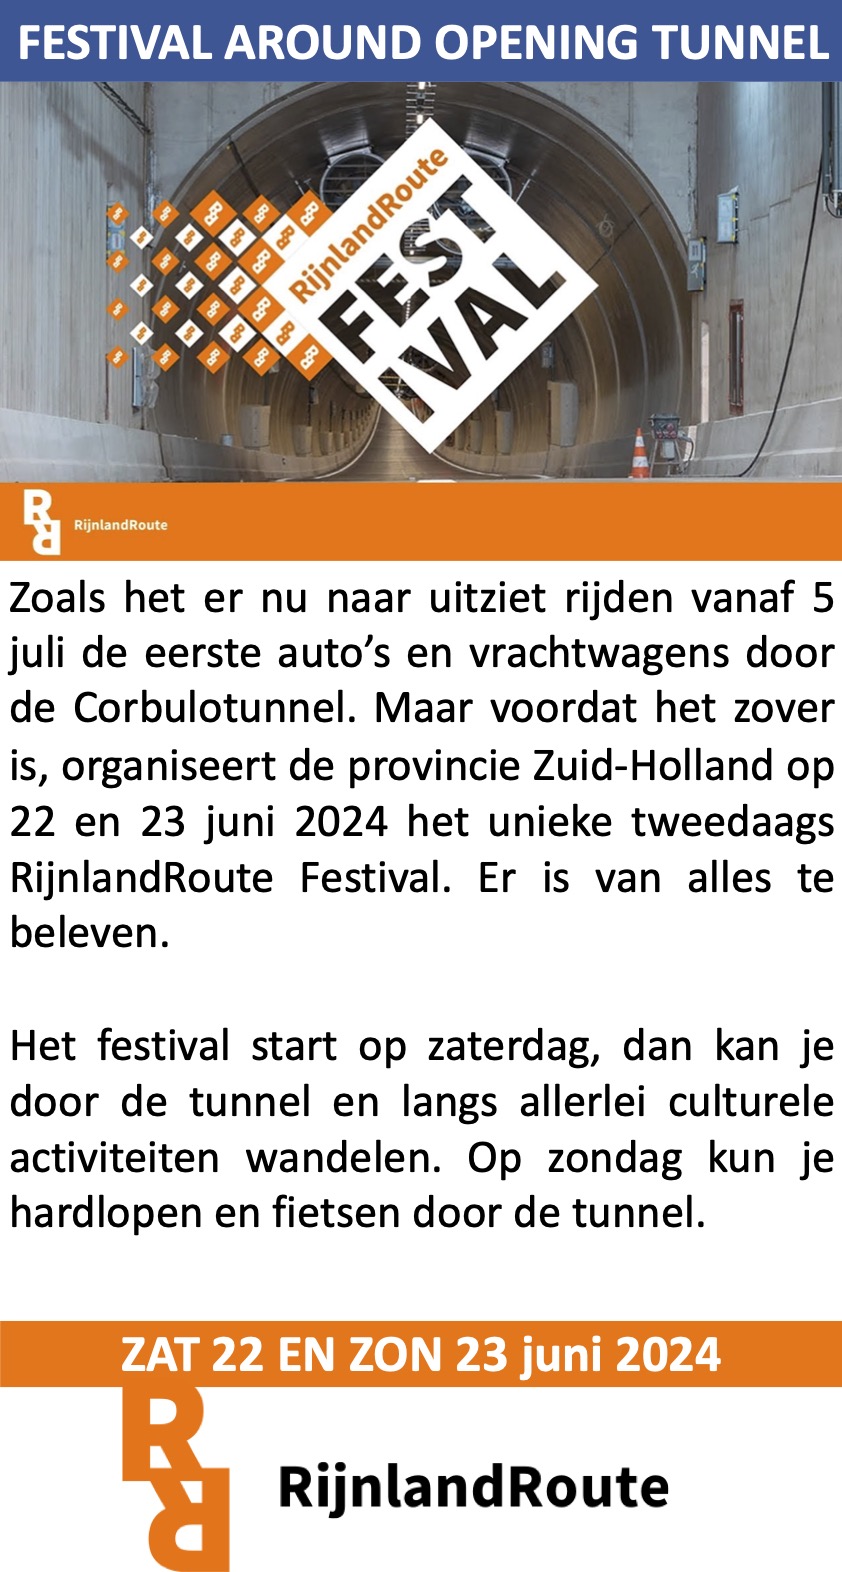 RijnlandRoute Festival 22 en 23 juni 2024